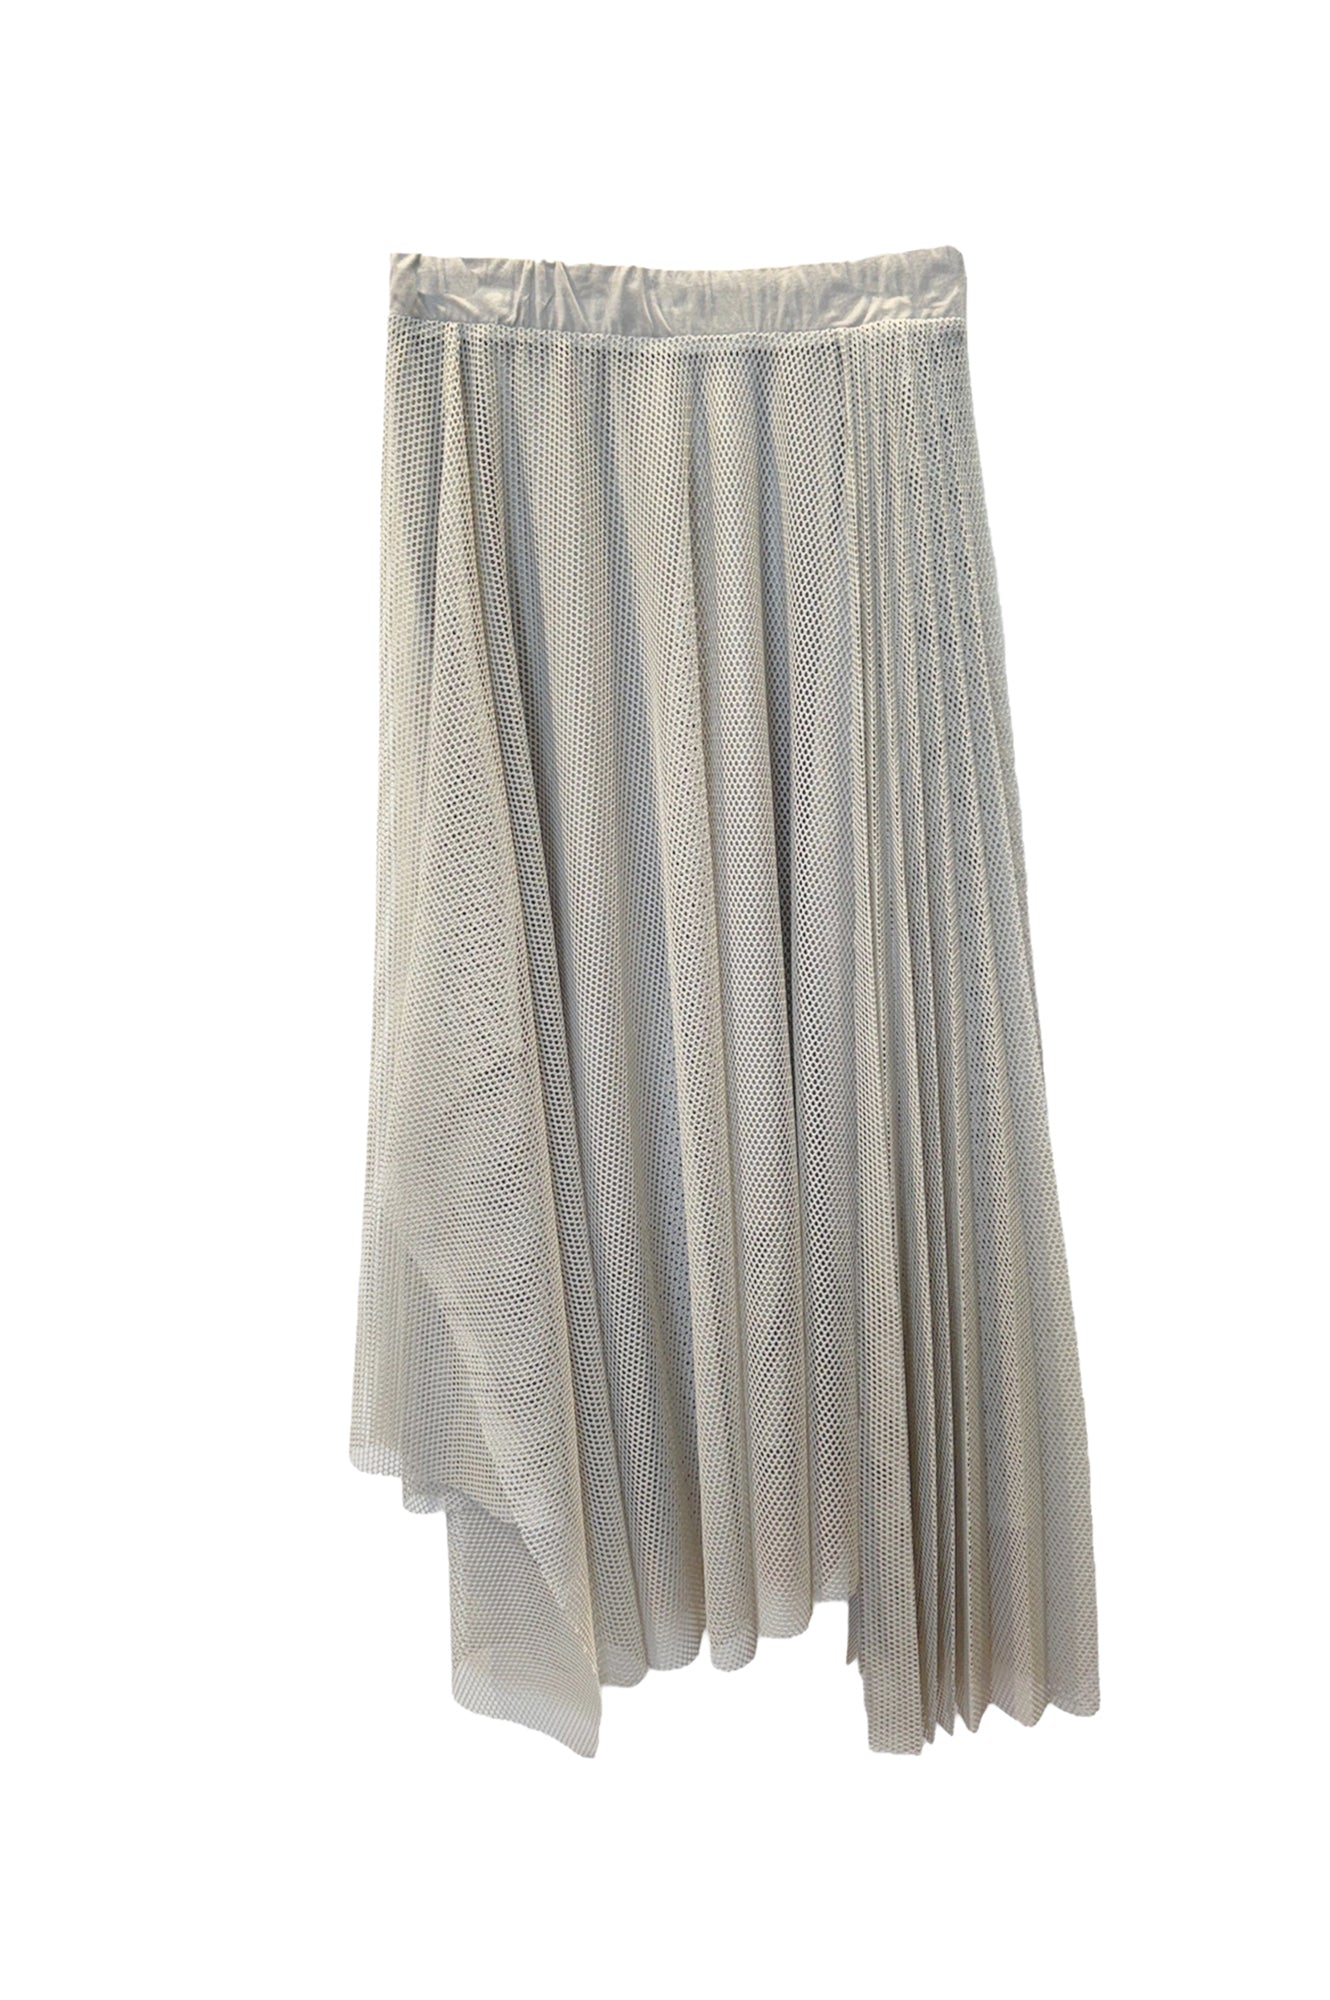 DAWN IVORY mesh pleated skirt